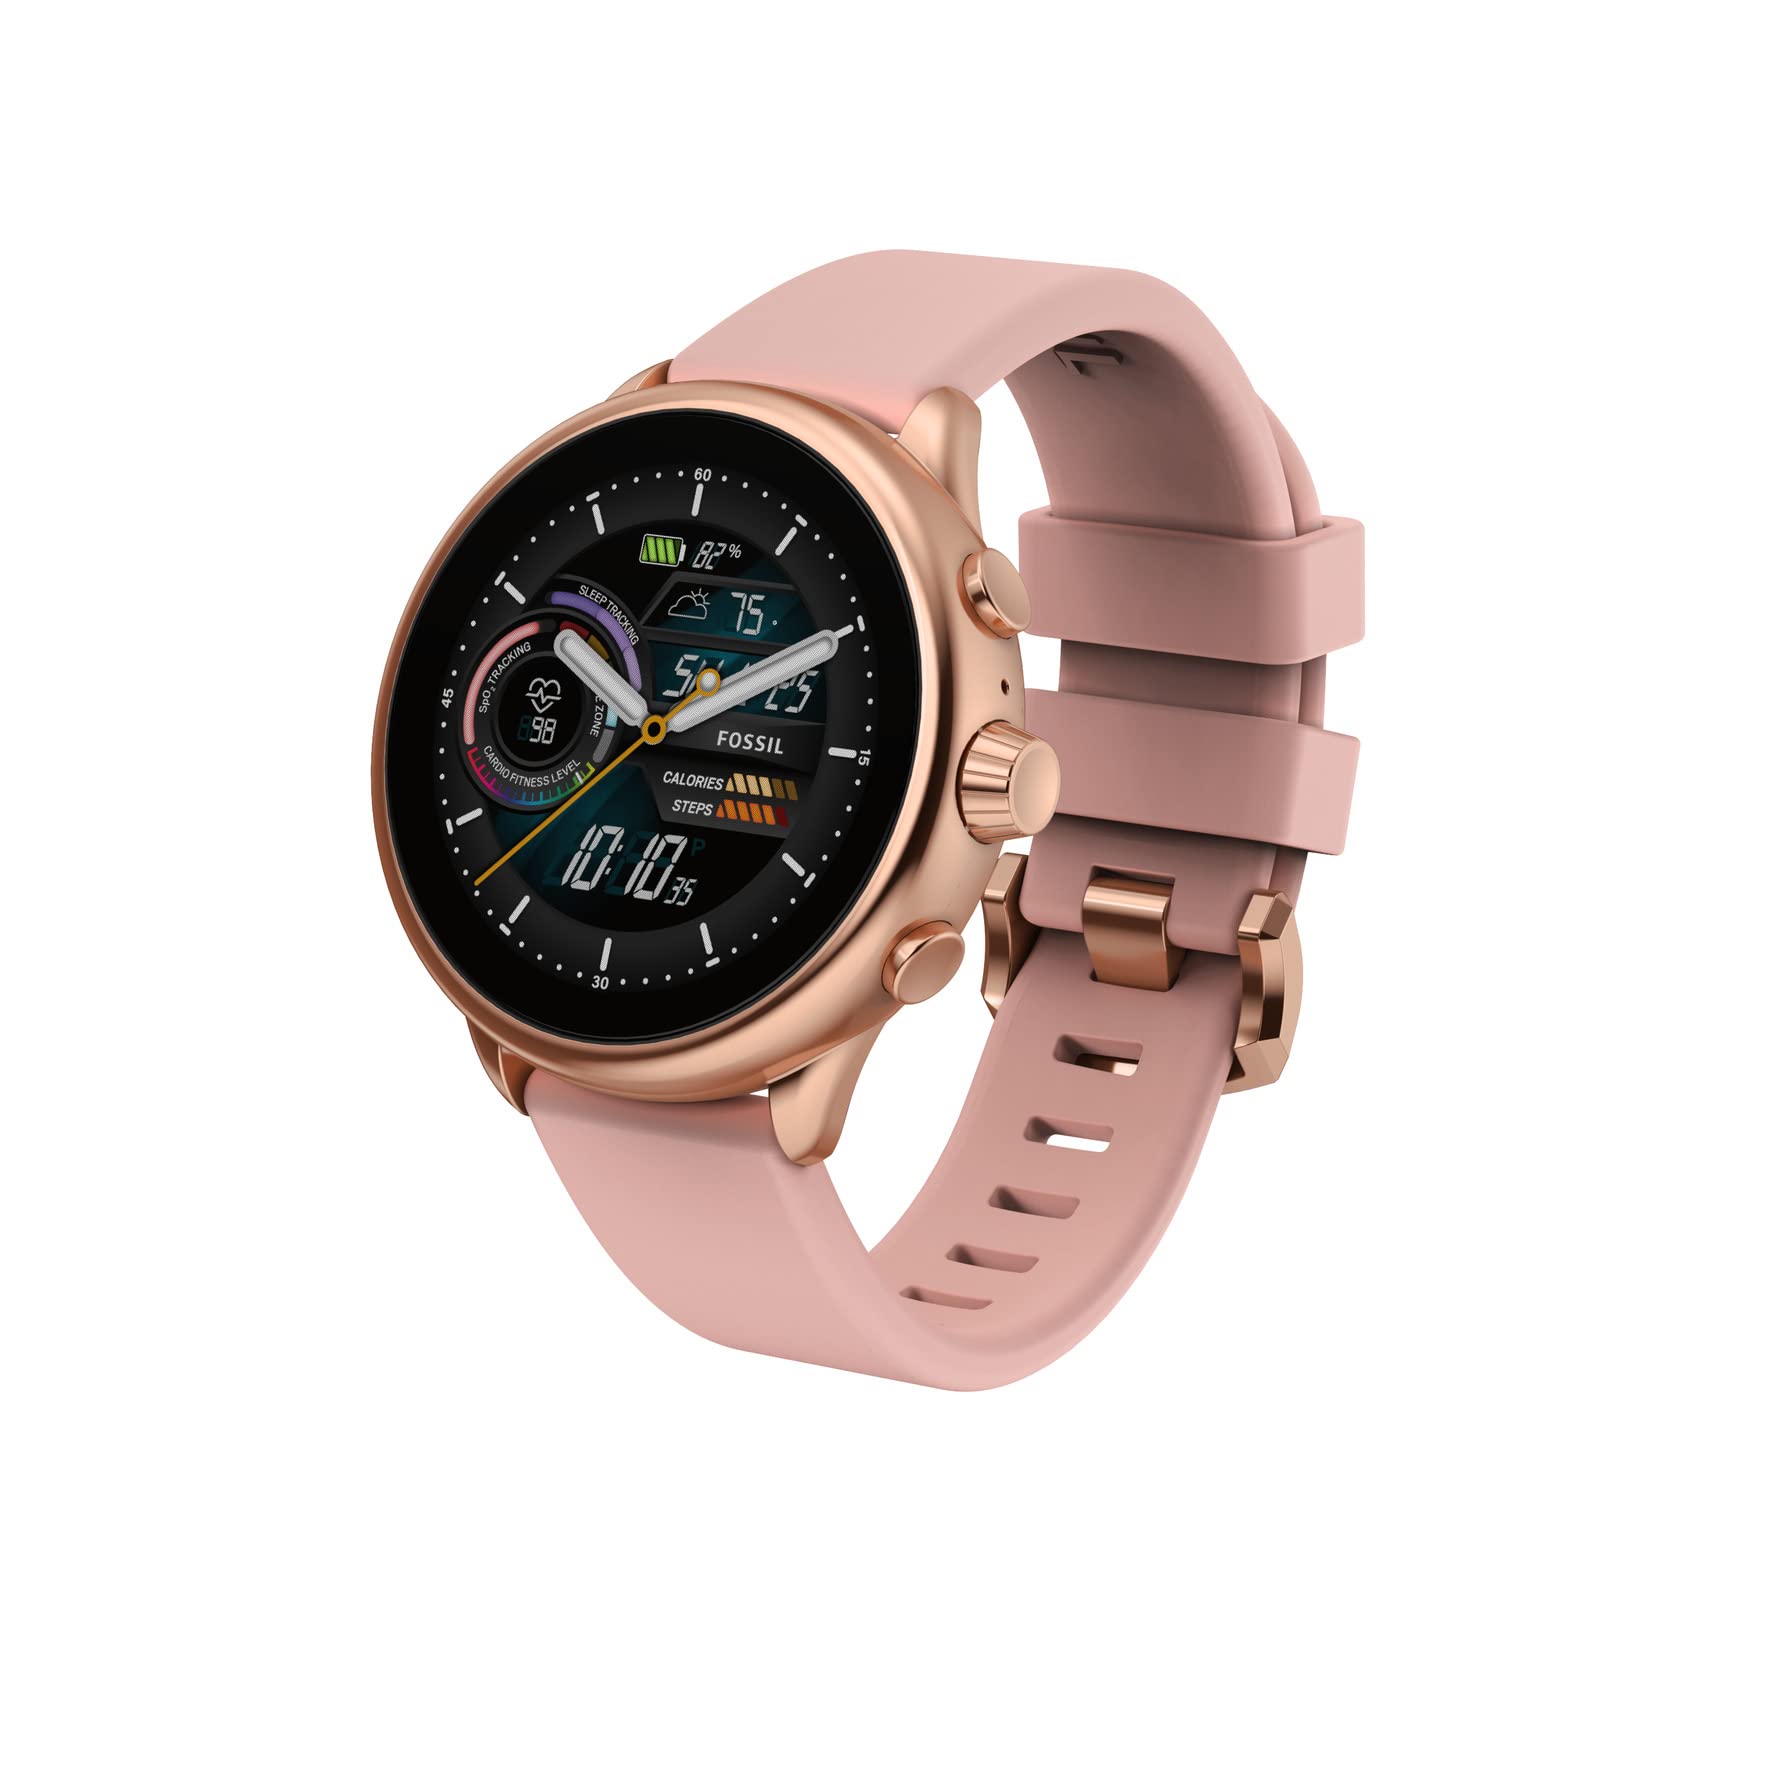 Fossil Gen 6 Wellness Edition 44mm Touchscreen Smart Watch with Alexa Built-In, Fitness Tracker, Sleep Tracker, Heart Rate Monitor, GPS, Speaker, Music Control, Smartphone Notifications